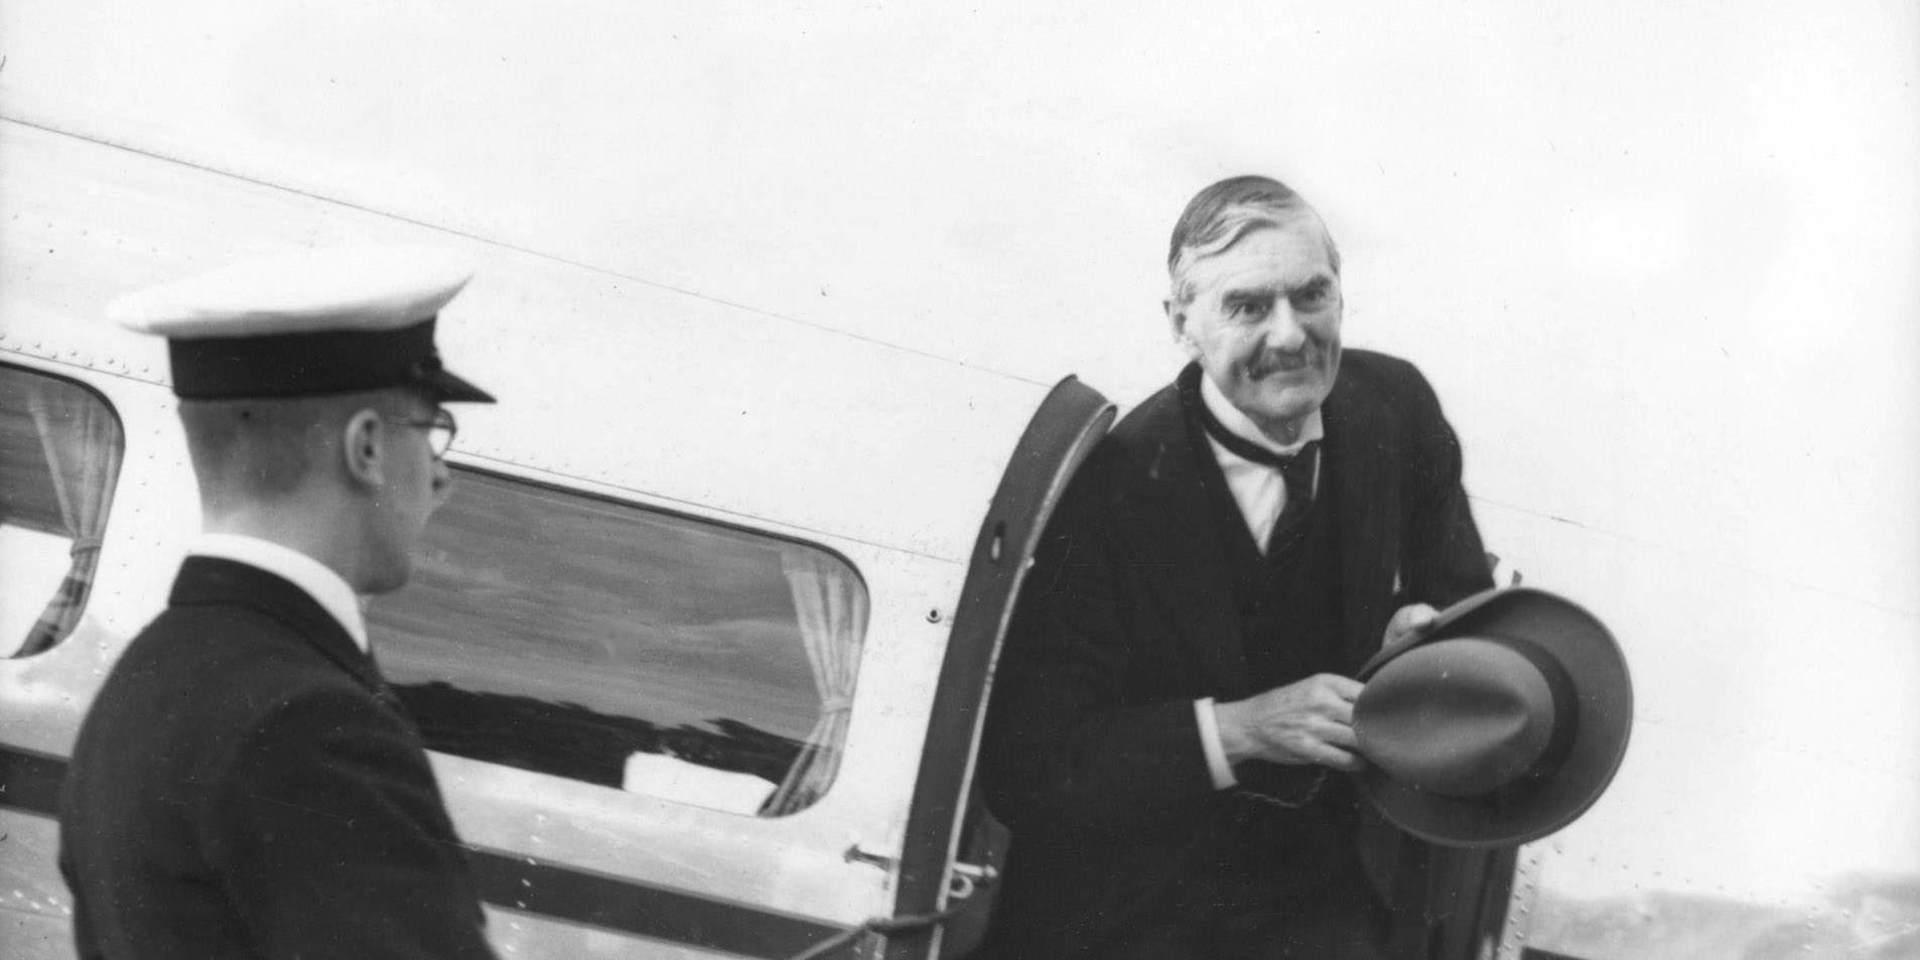 Fred i vår tid! Neville Chamberlain kommer tillbaka från ett möte med Adolf Hitler i september 1938. 